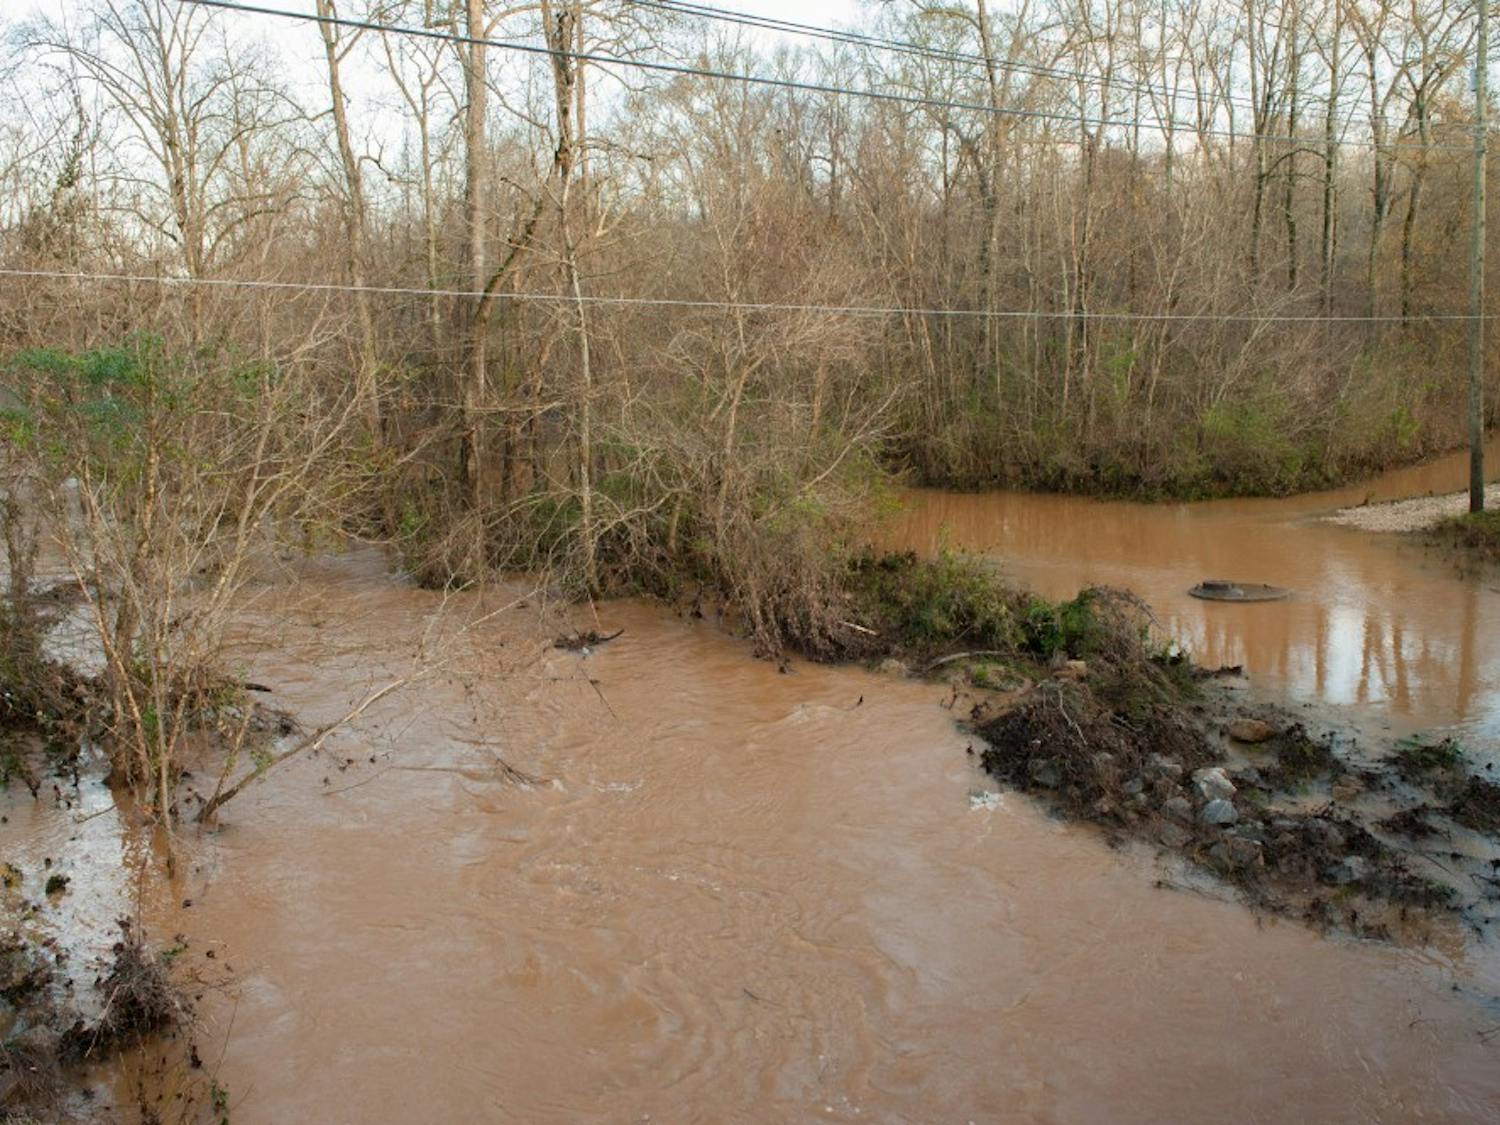 Sougahatchee Creek spread beyond its banks flooding the woods around it. Friday, Dec. 25, 2015, in Auburn, Alabama.